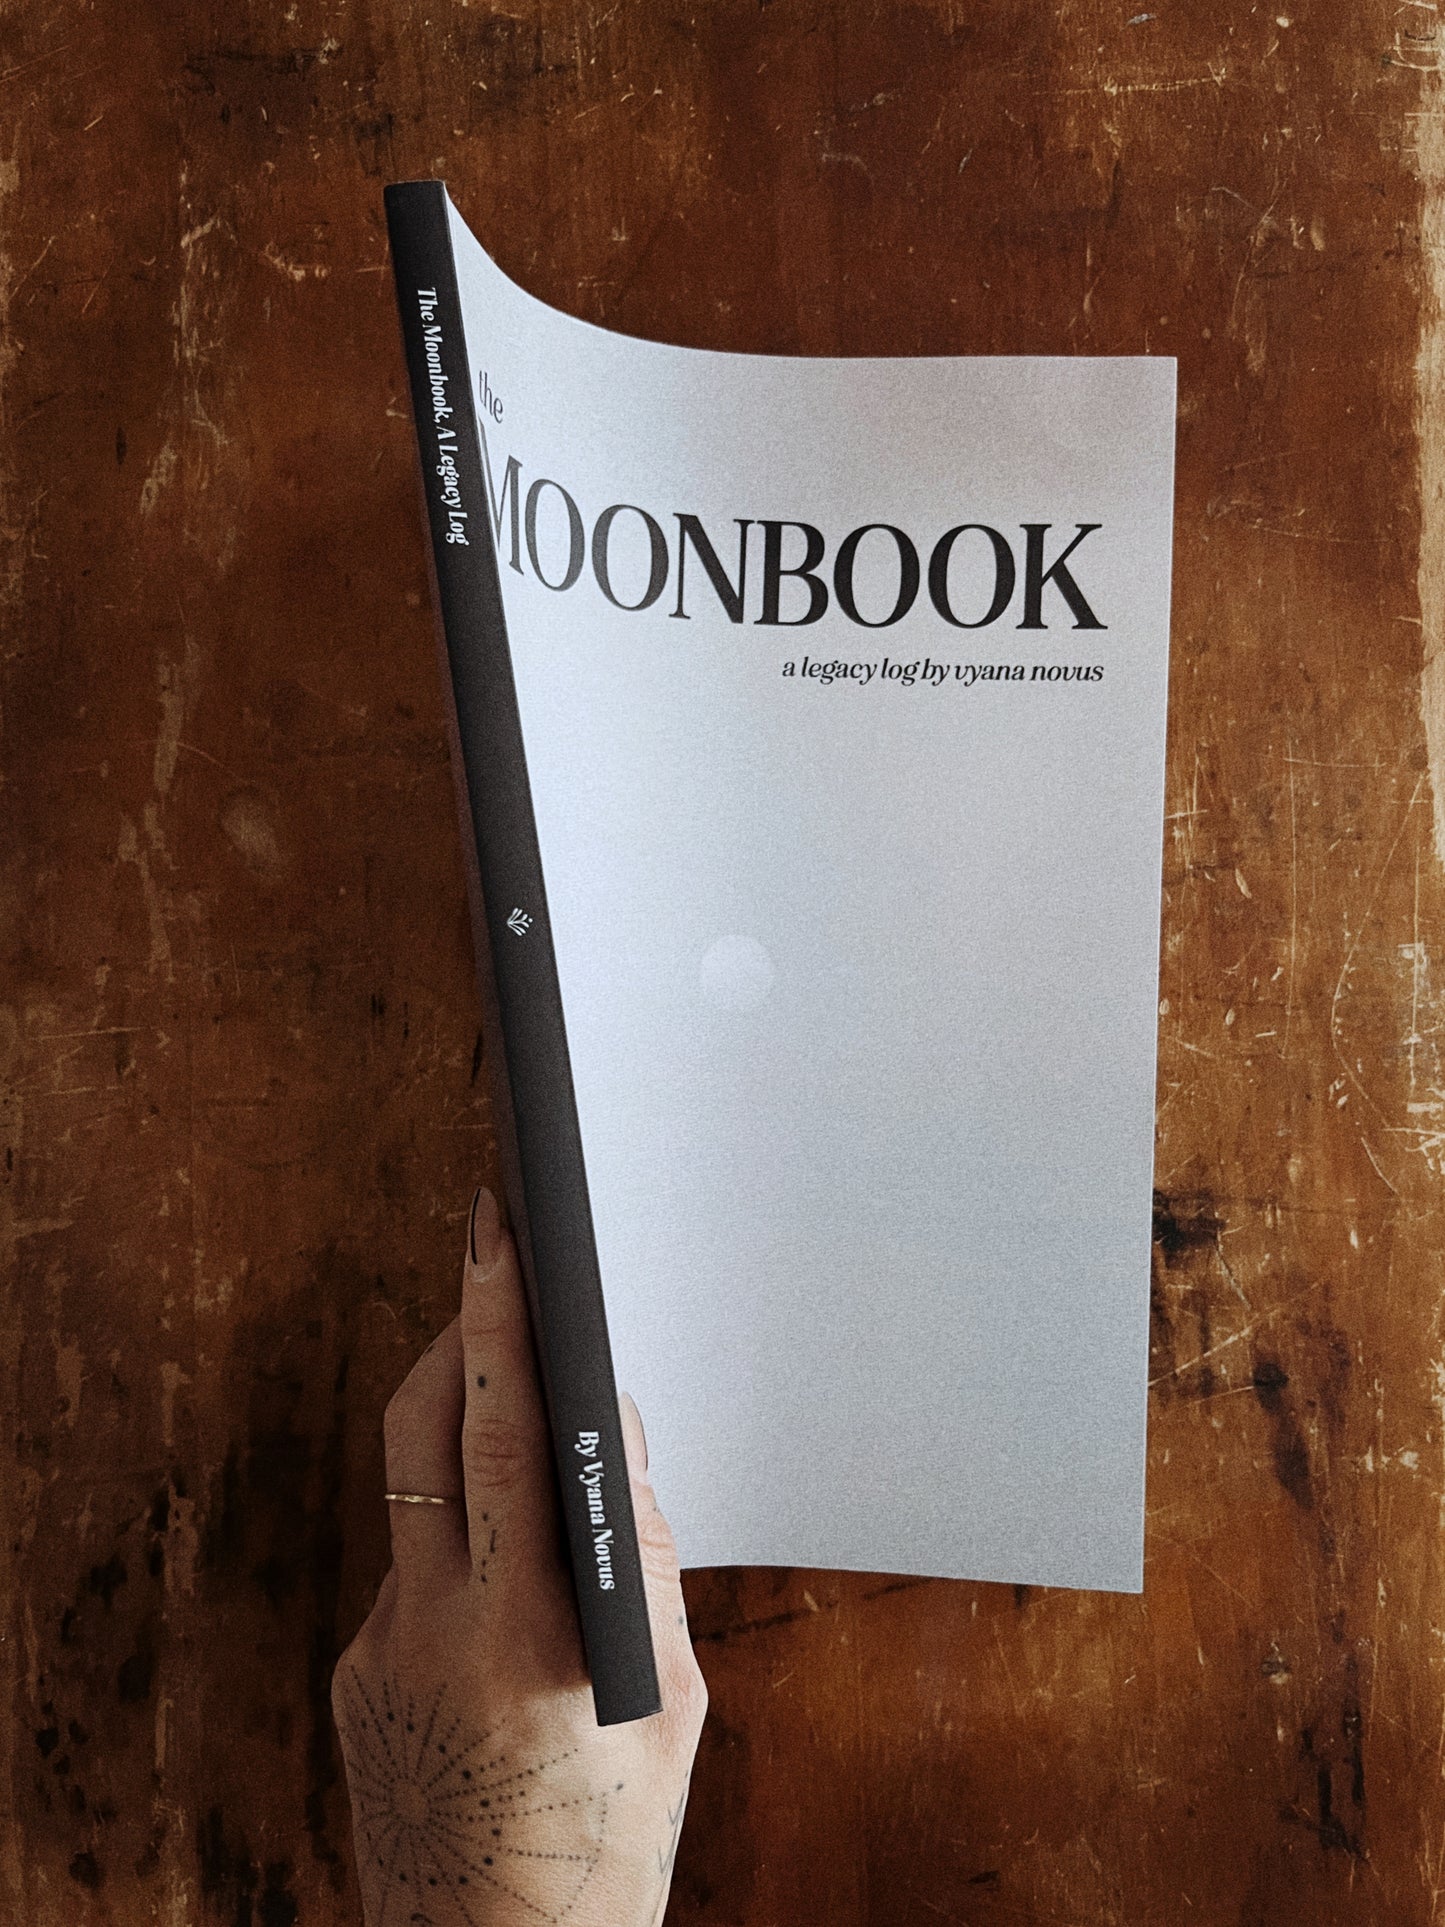 The Moonbook Journal